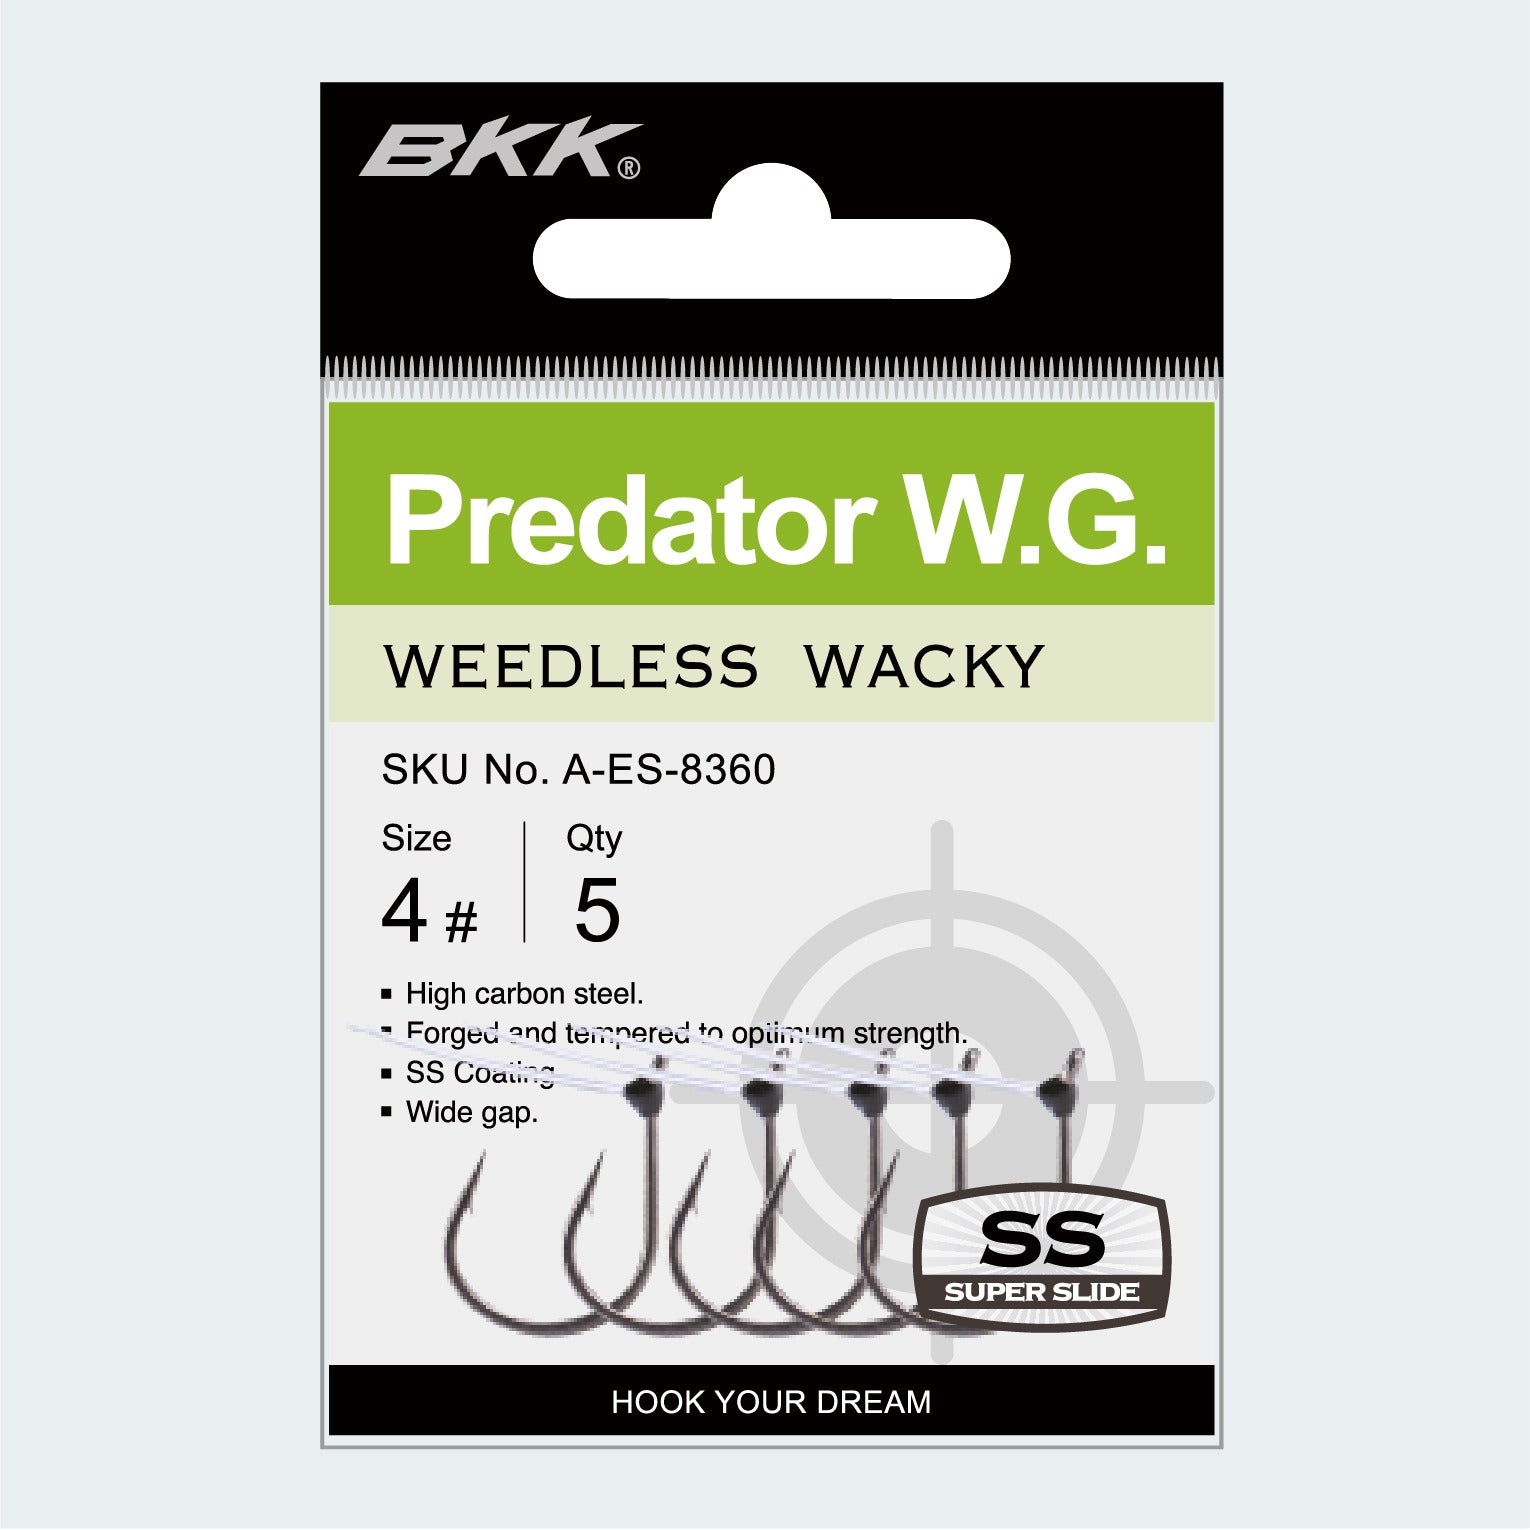 BKK Predator W.G. Weedless 1